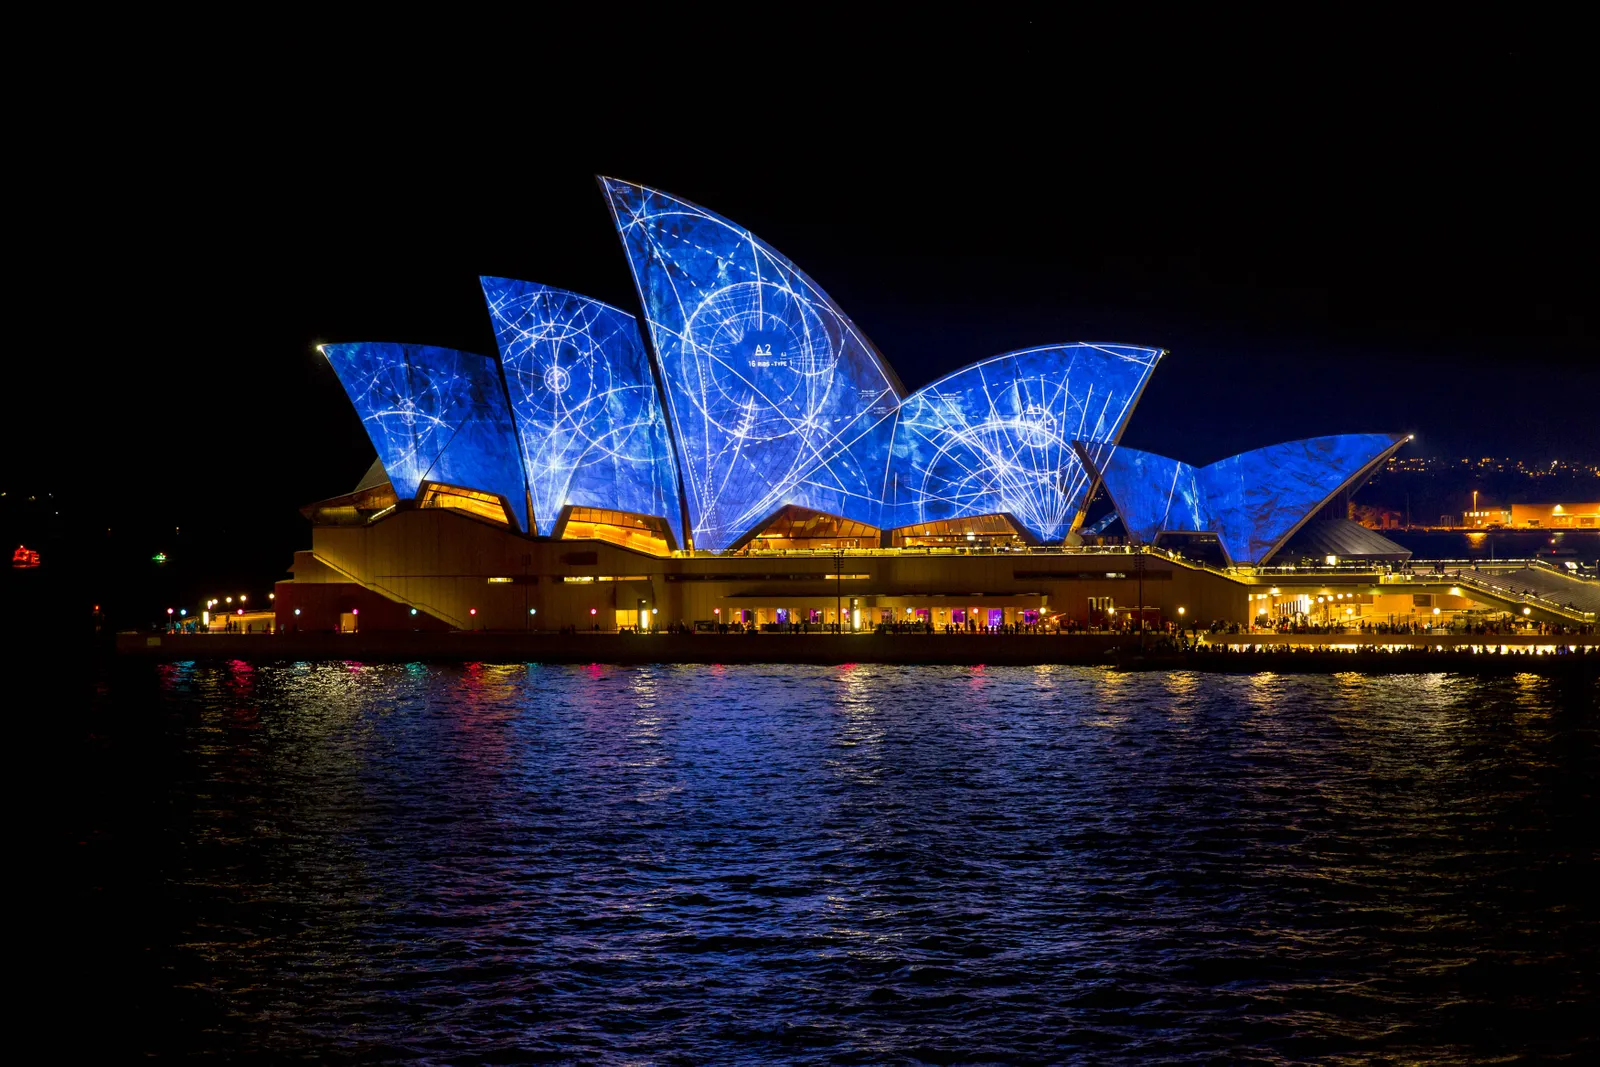 Sydney's Spectacular Art in Mesmerizing GIFs | Travel| Smithsonian Magazine